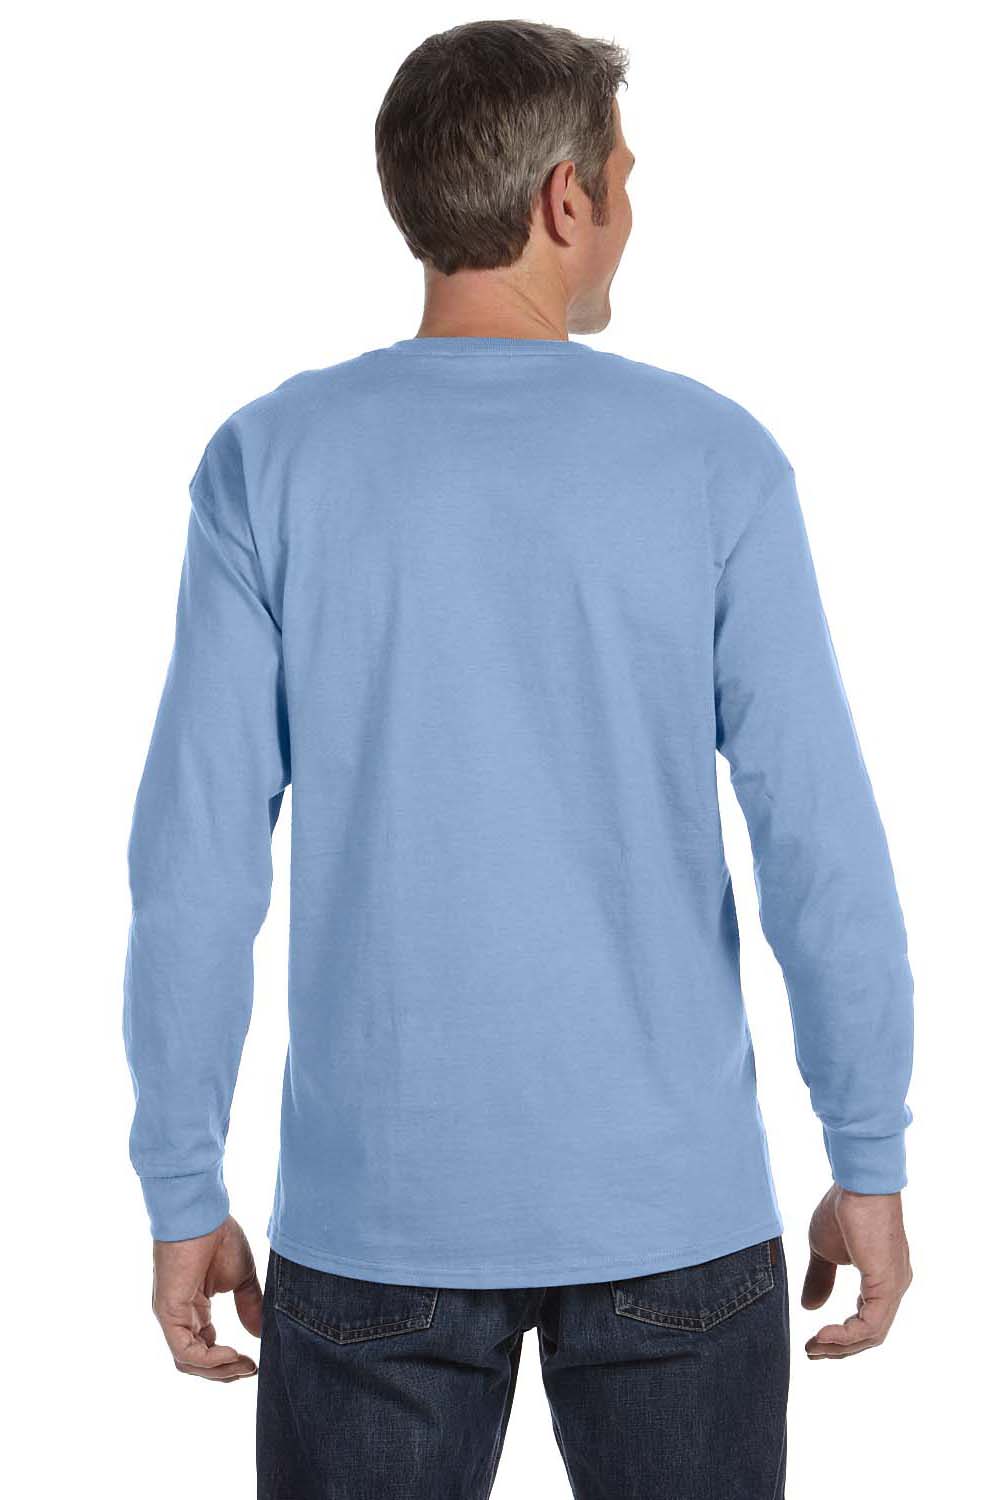 Hanes 5586 Mens ComfortSoft Long Sleeve Crewneck T-Shirt Light Blue Back